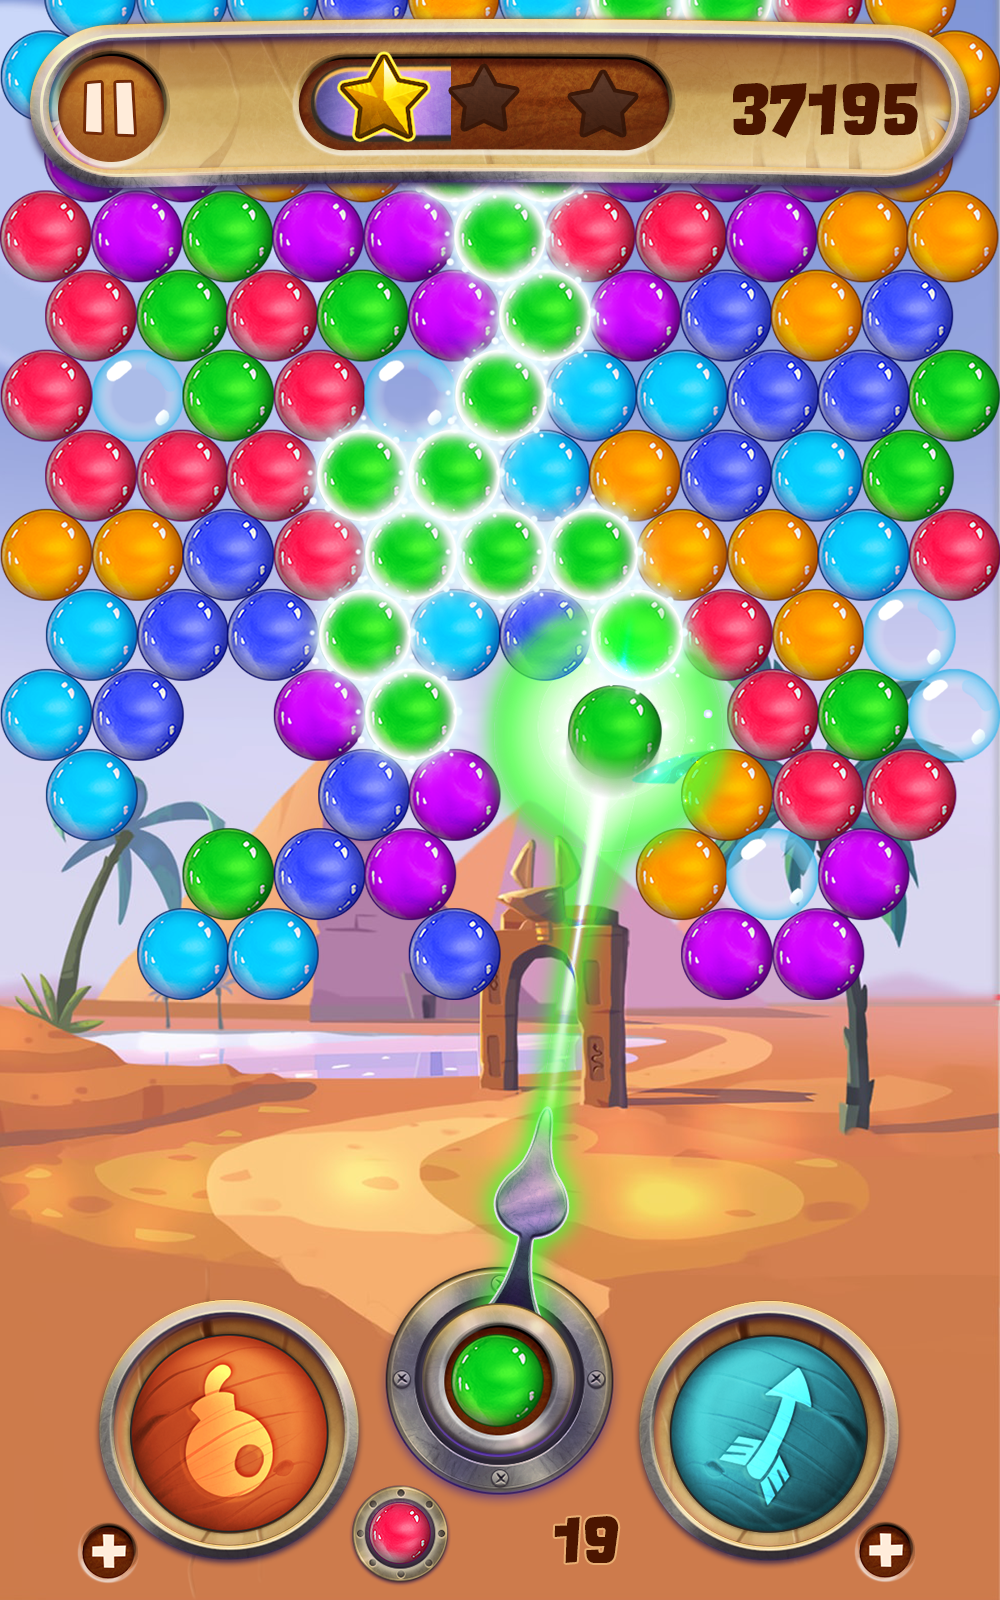 Pyramid Pop screenshot game